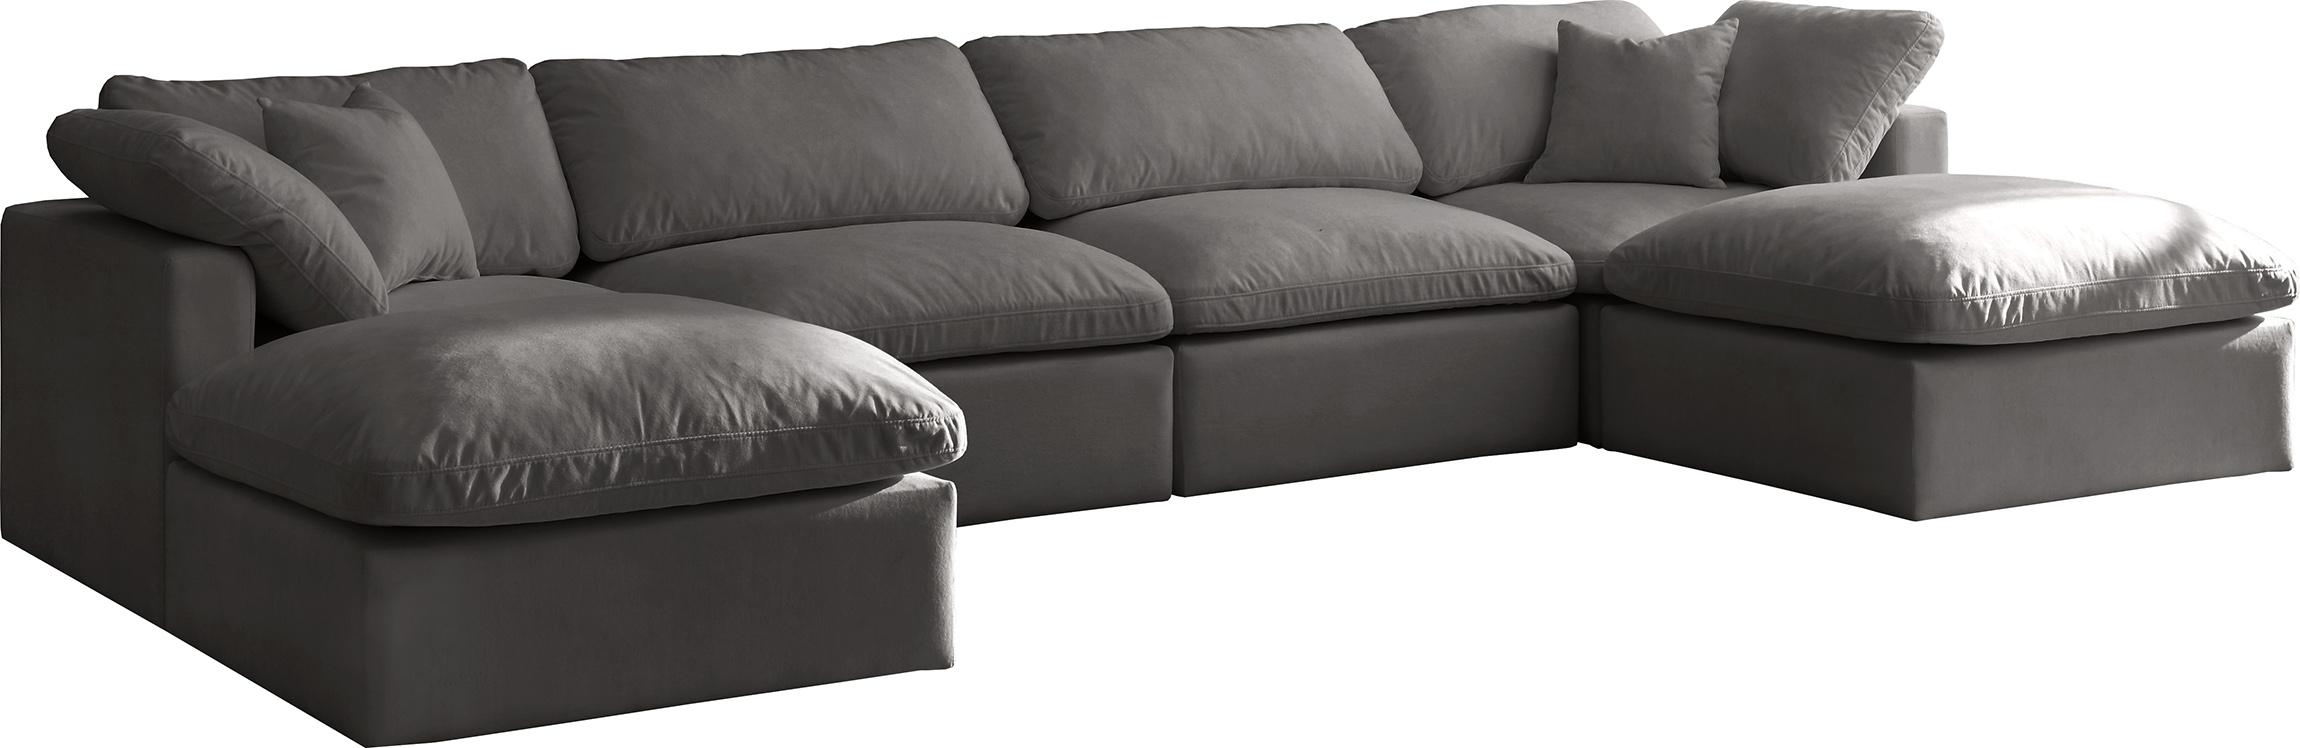 Contemporary, Modern Modular Sectional Sofa 602Grey-Sec6B 602Grey-Sec6B in Gray Fabric